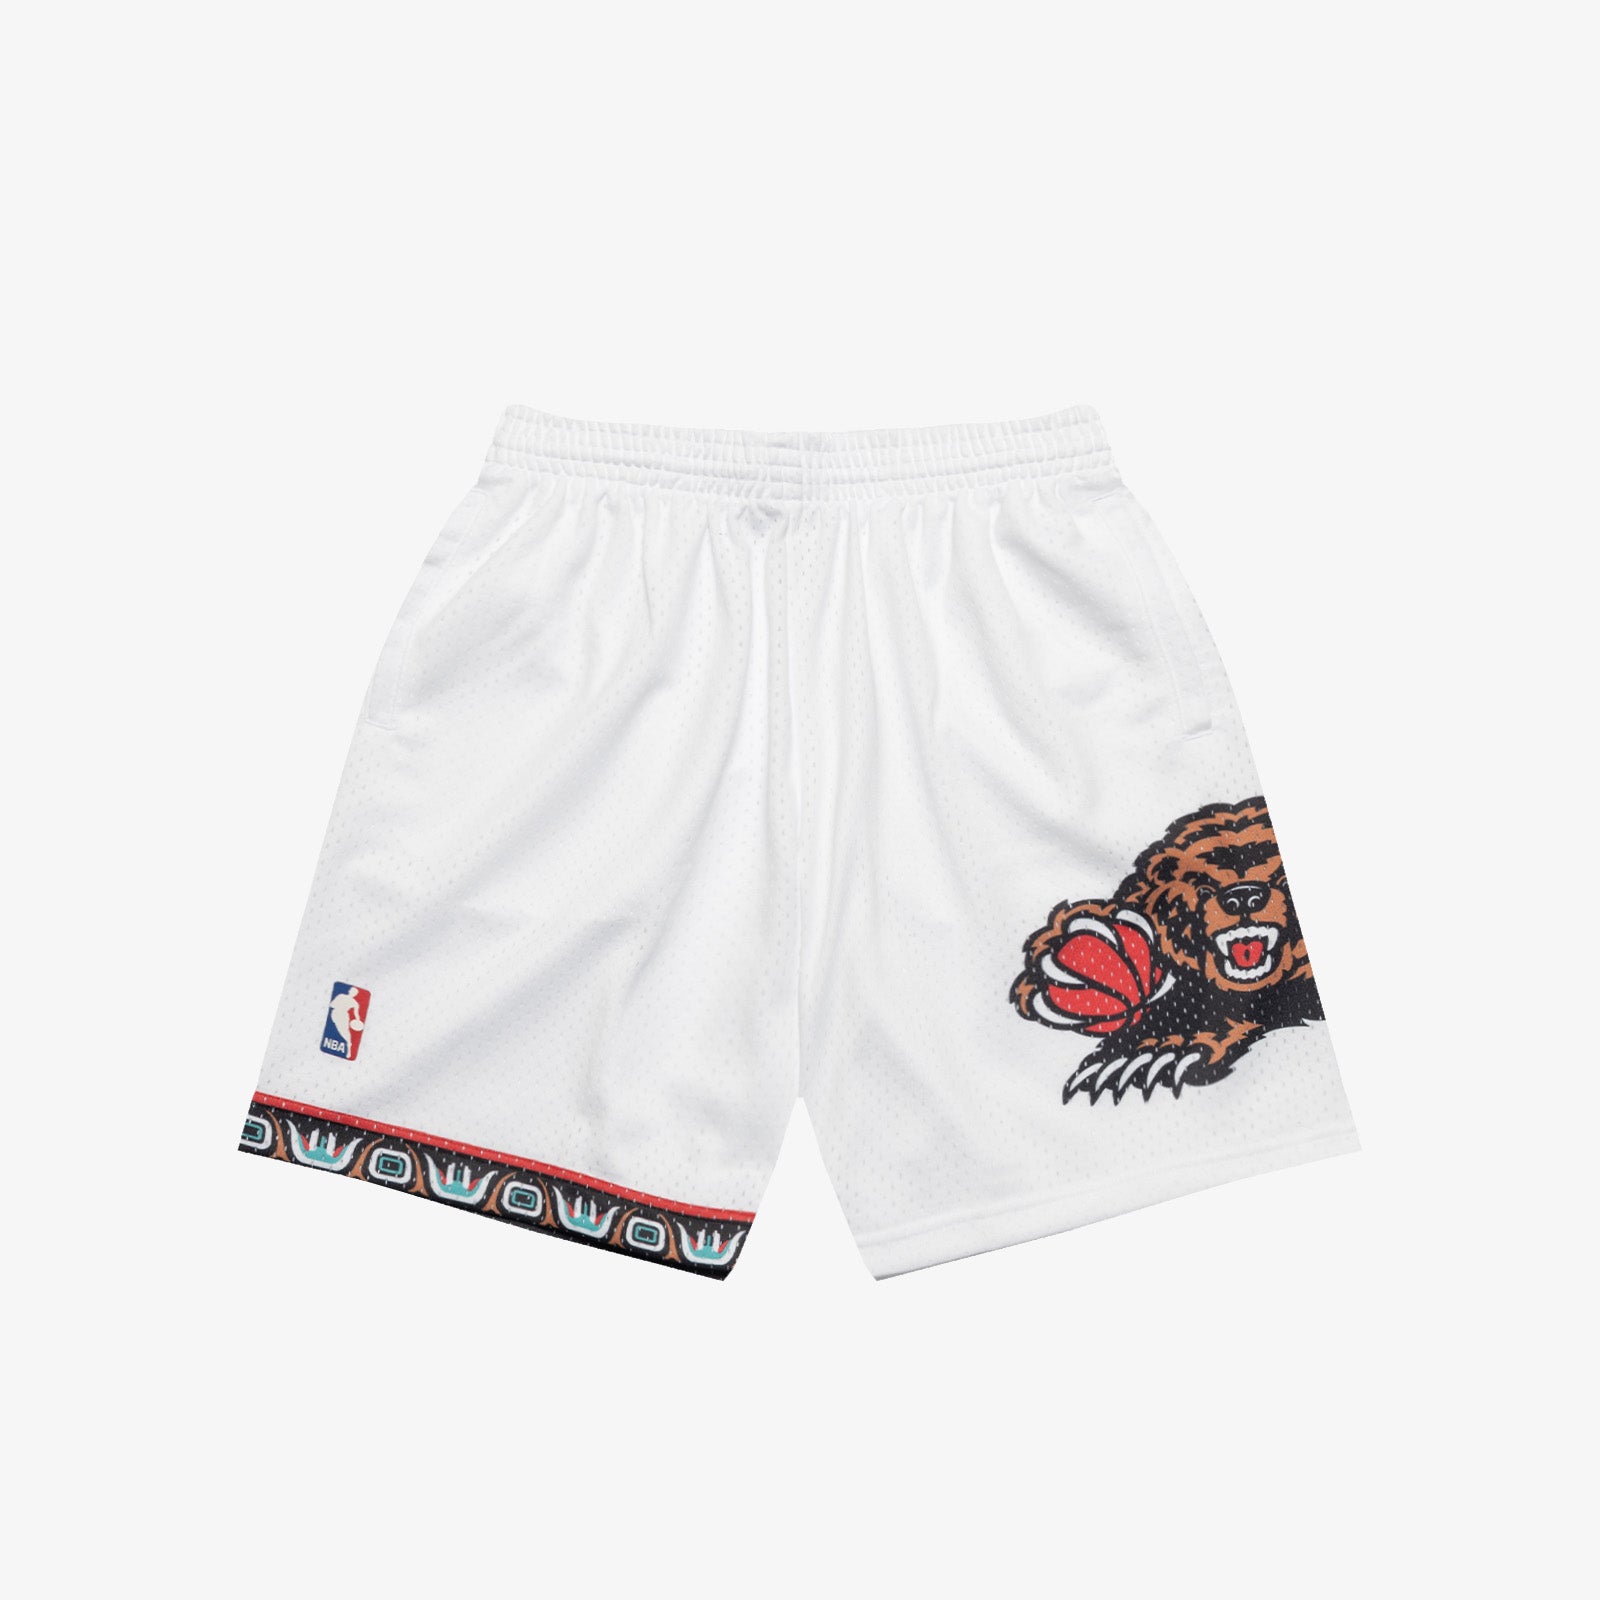 Miami Heat 96-97 Road Swingman Shorts